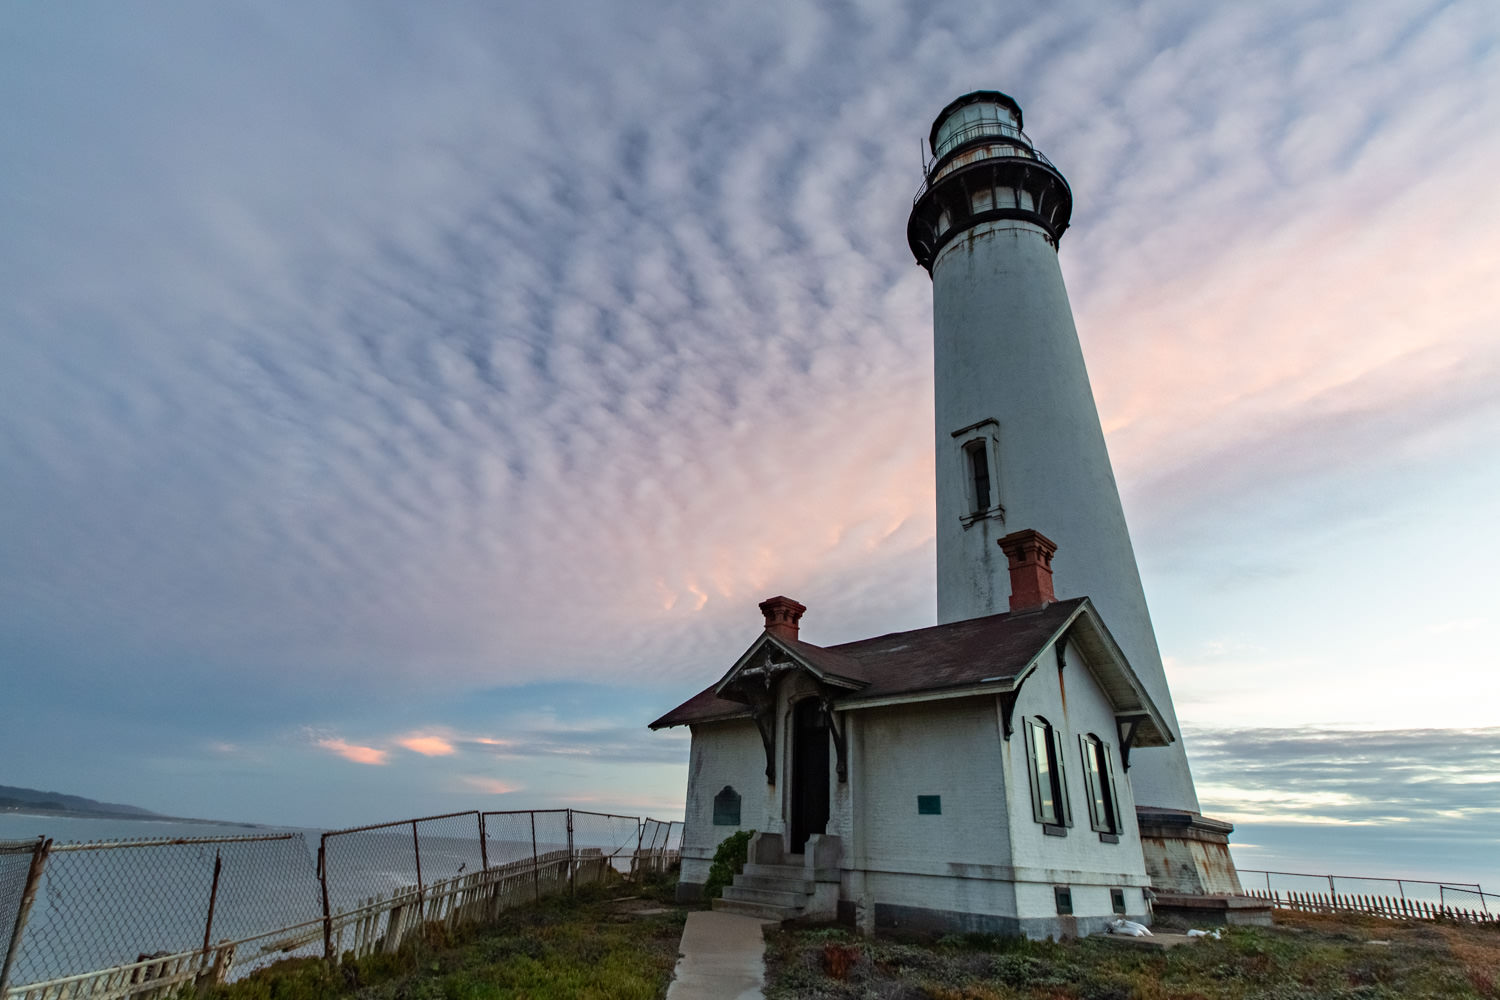 Pigeon Point Light Station (Lighthouse) (December 2018)